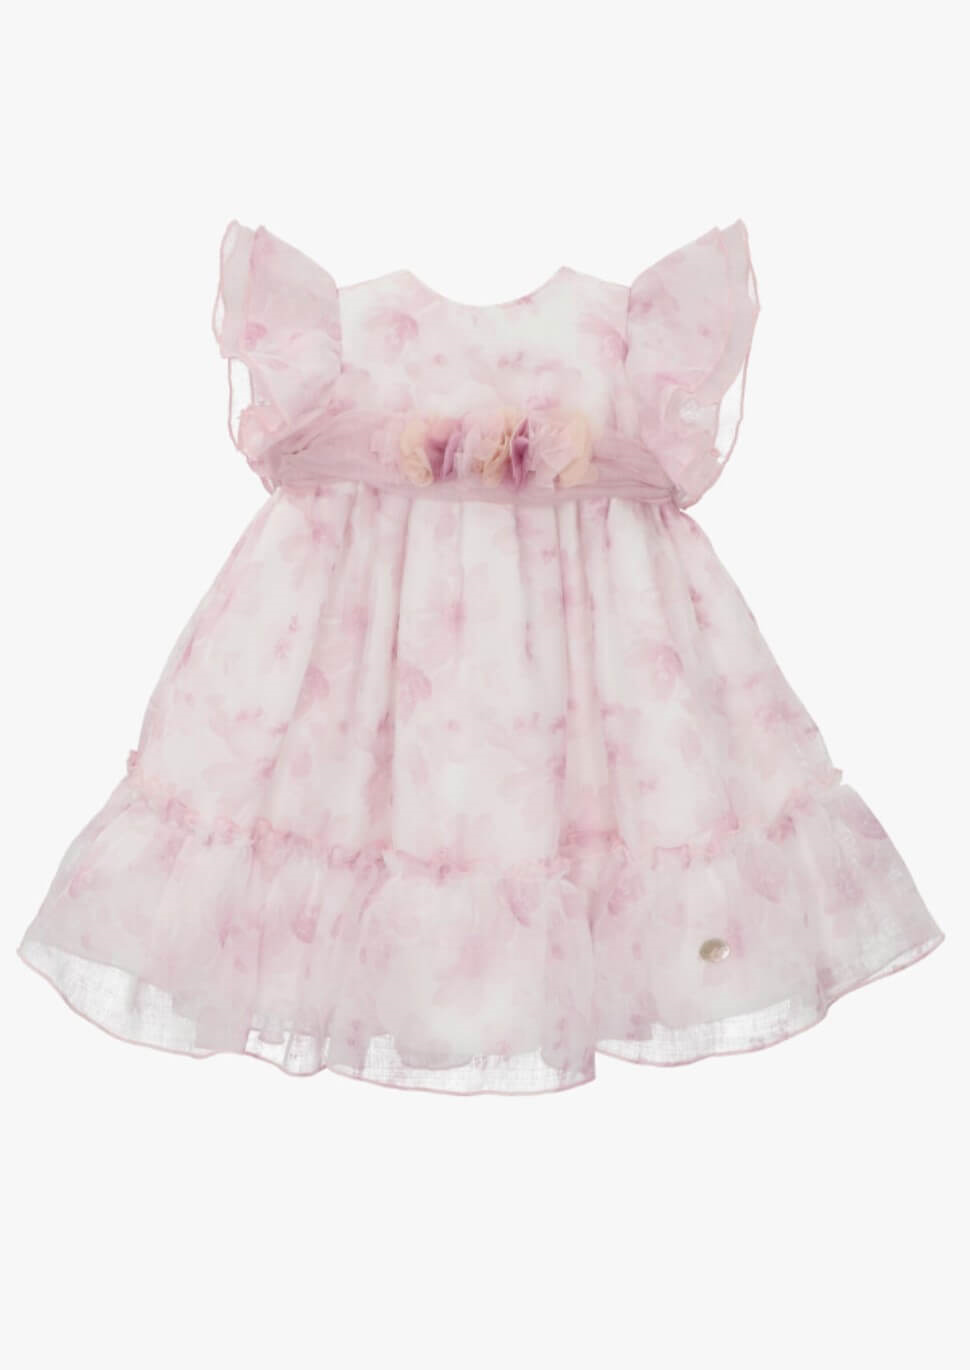 Powder Pink Rose Dress by Spanish Brand Martin Aranda available at tors childrens wear